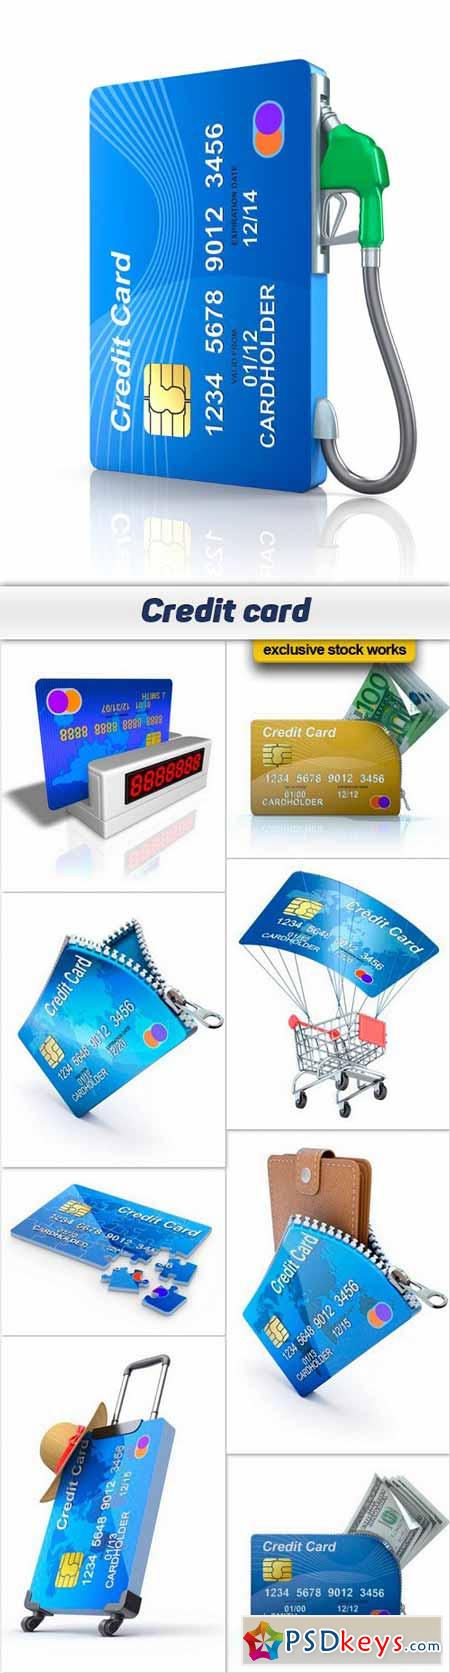 Credit card - 9 UHQ JPEG